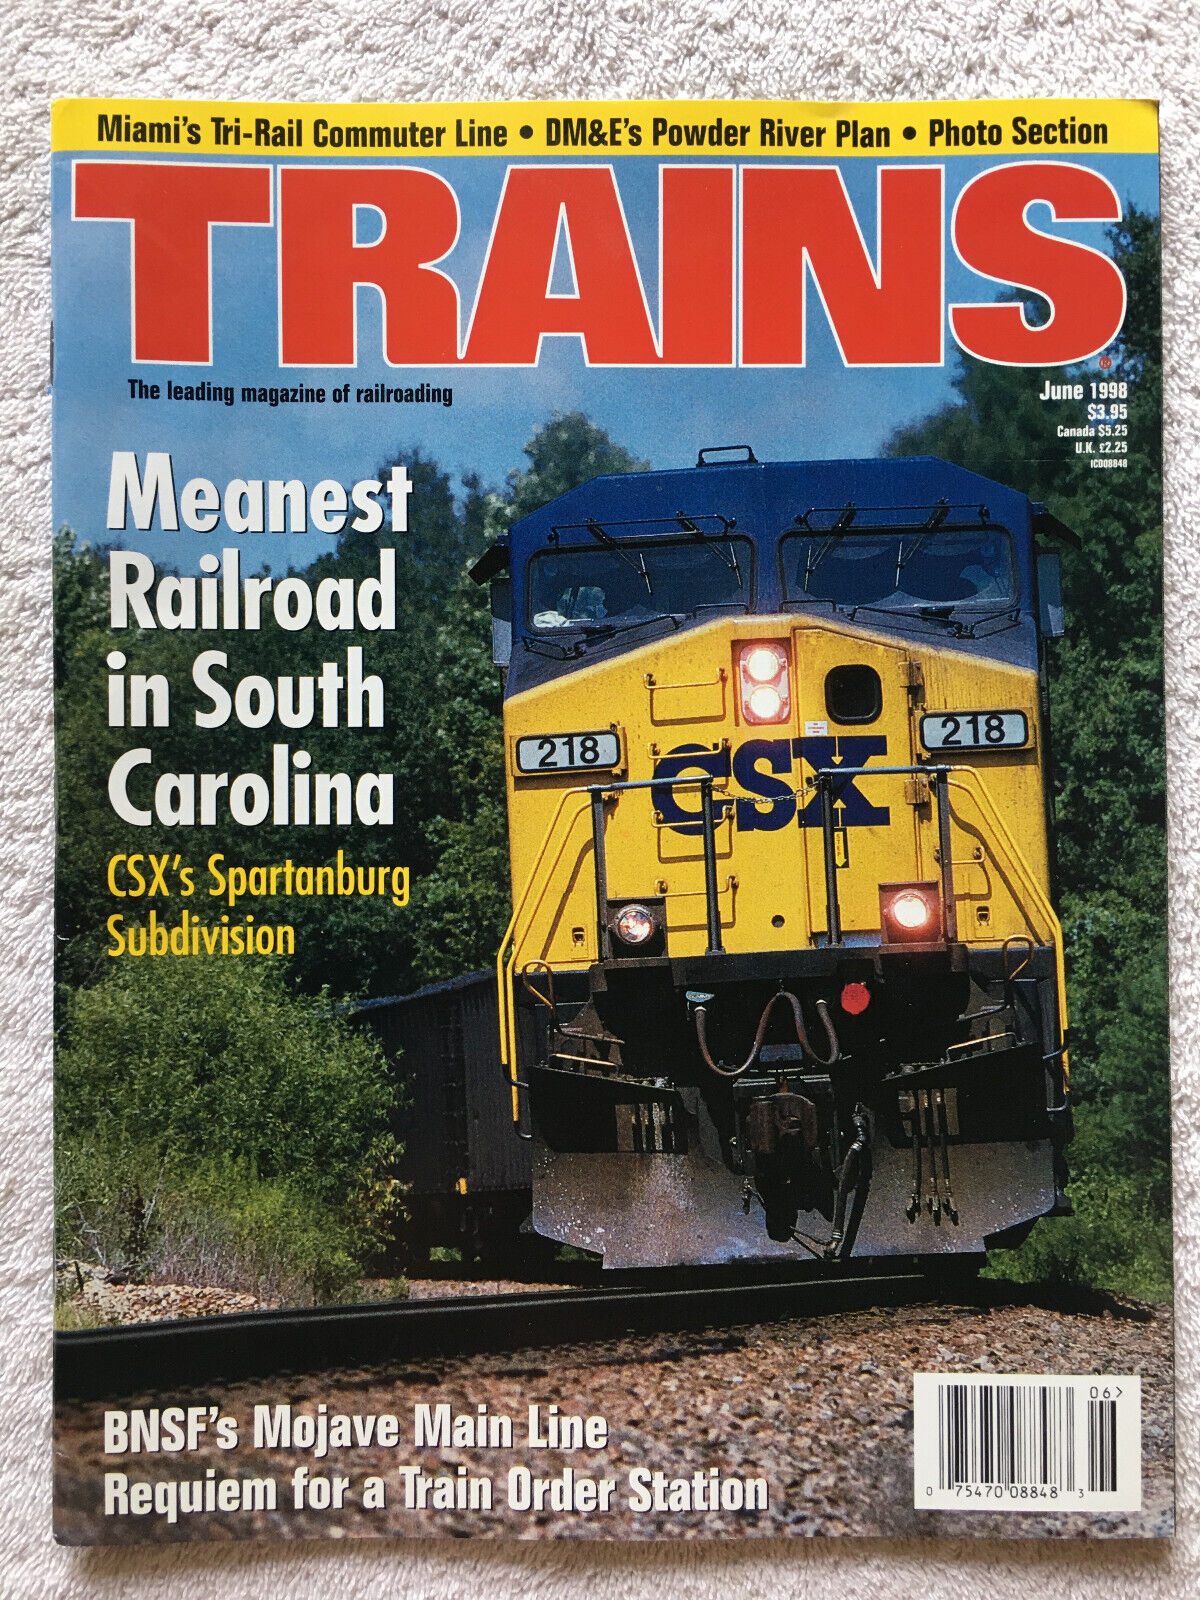 TRAINS magazine JUNE 1998 - CSX South Carolina, BNSF Mojave, Miami Tri-Rail